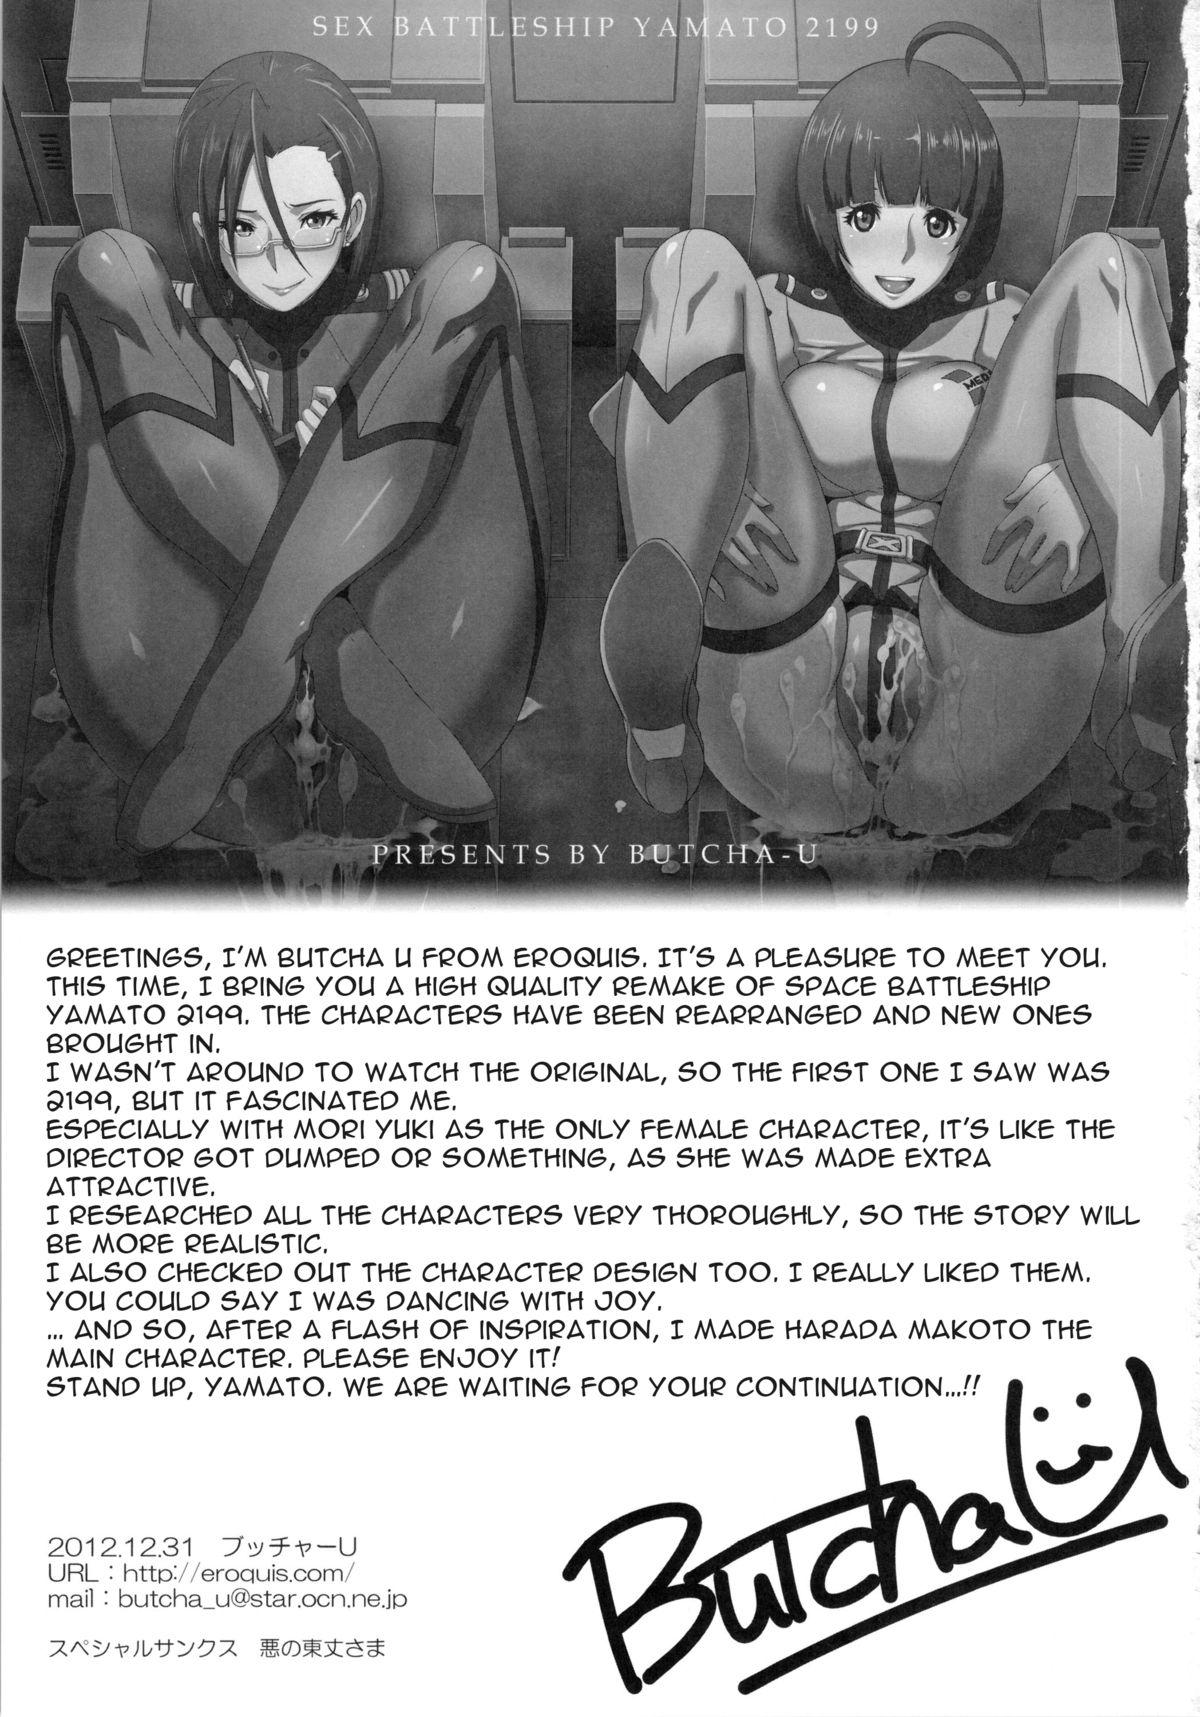 Bareback Ian Senkan Yamato 2199 | Comfort Battleship Yamato 2199 - Space battleship yamato Natural Boobs - Page 2